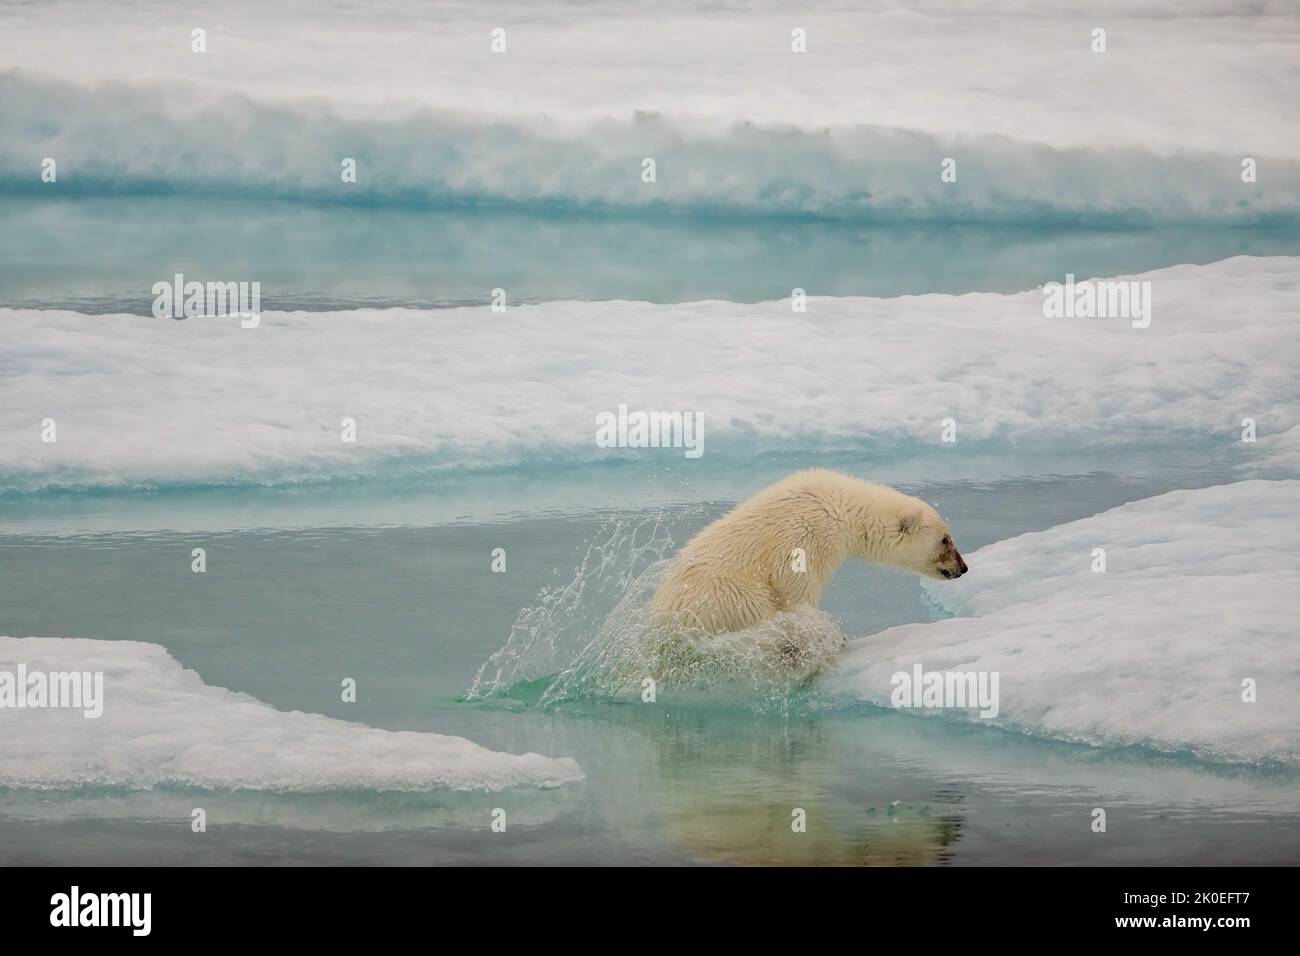 Polar bear  cub failed attempt at jumping  on sea ice in Beaufort Sea, Nunavut, Canada. Stock Photo